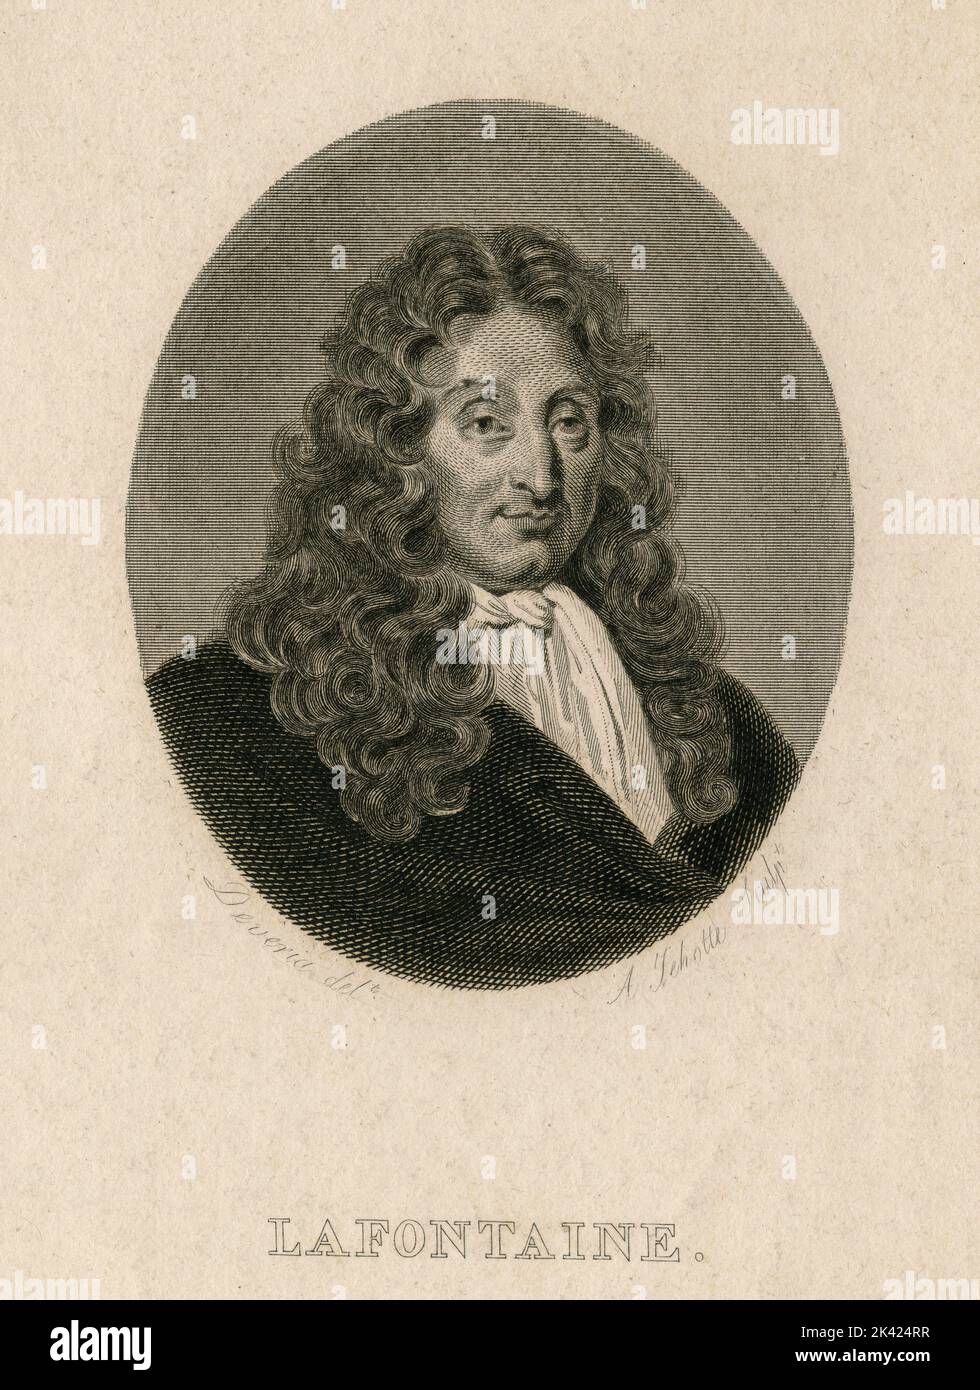 Portrait of French writer and poet Jean de La Fontaine, 1800 ca. Stock Photo